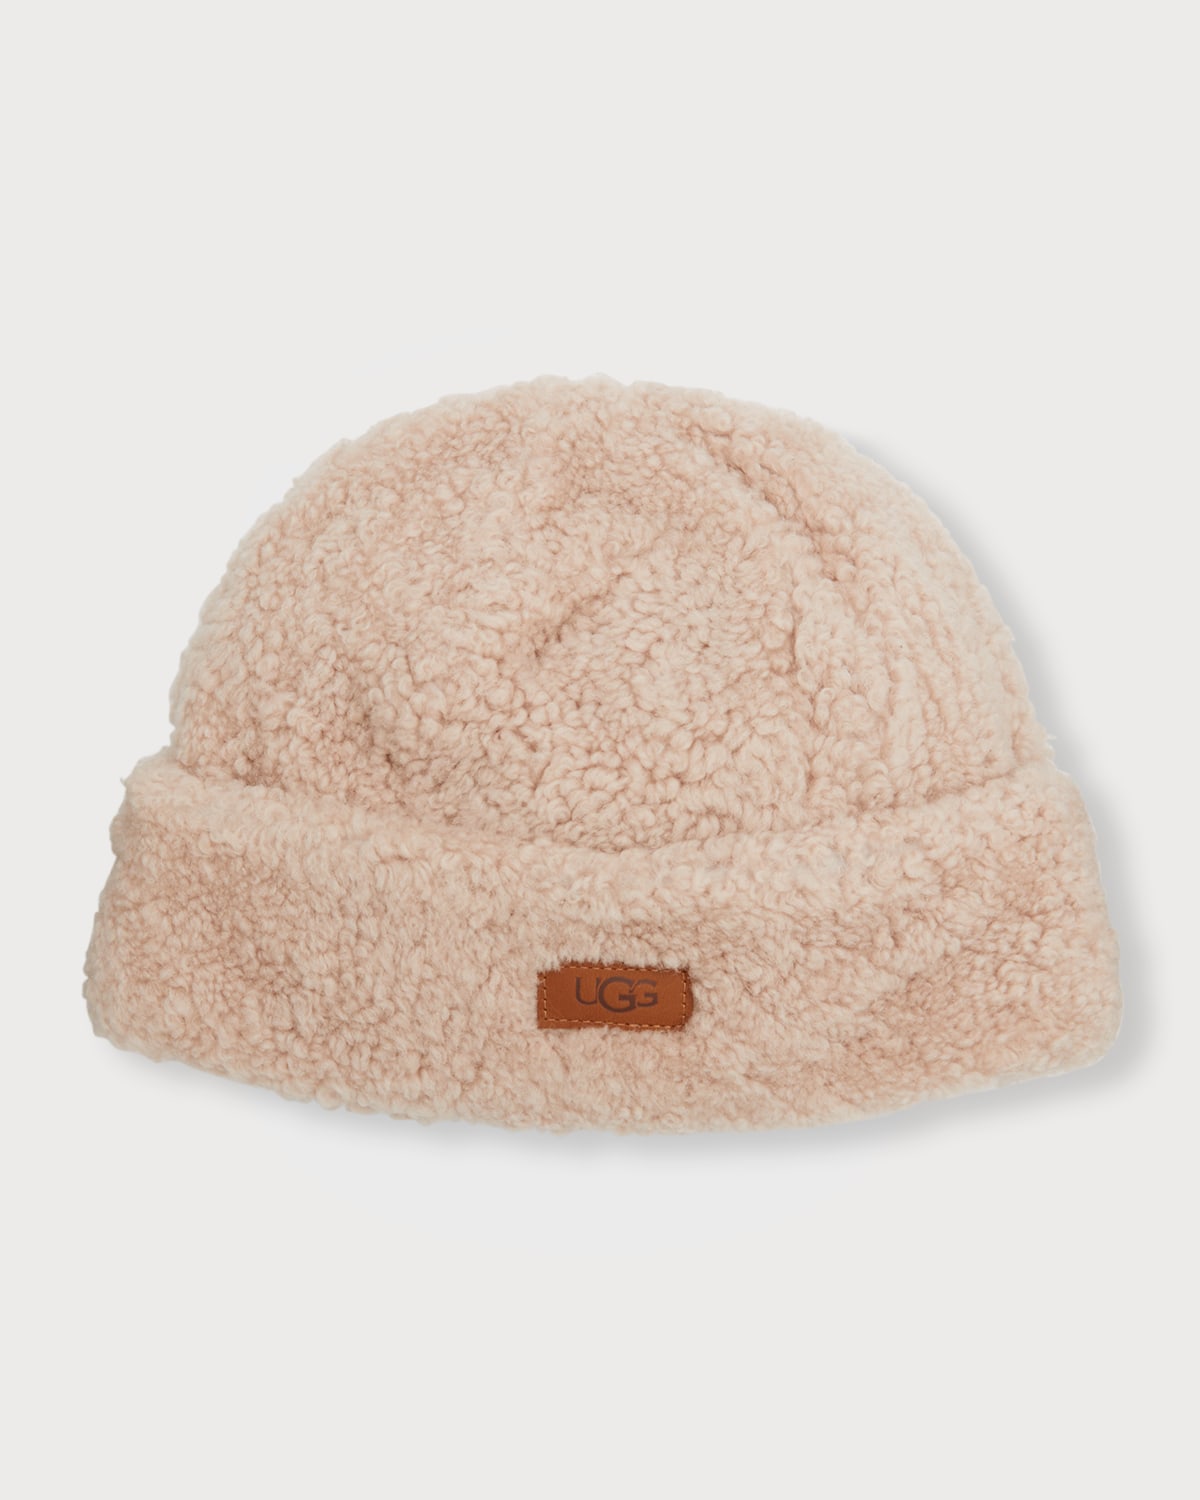 Ugg Curly Sheepskin Cuffed Hat | Smart Closet